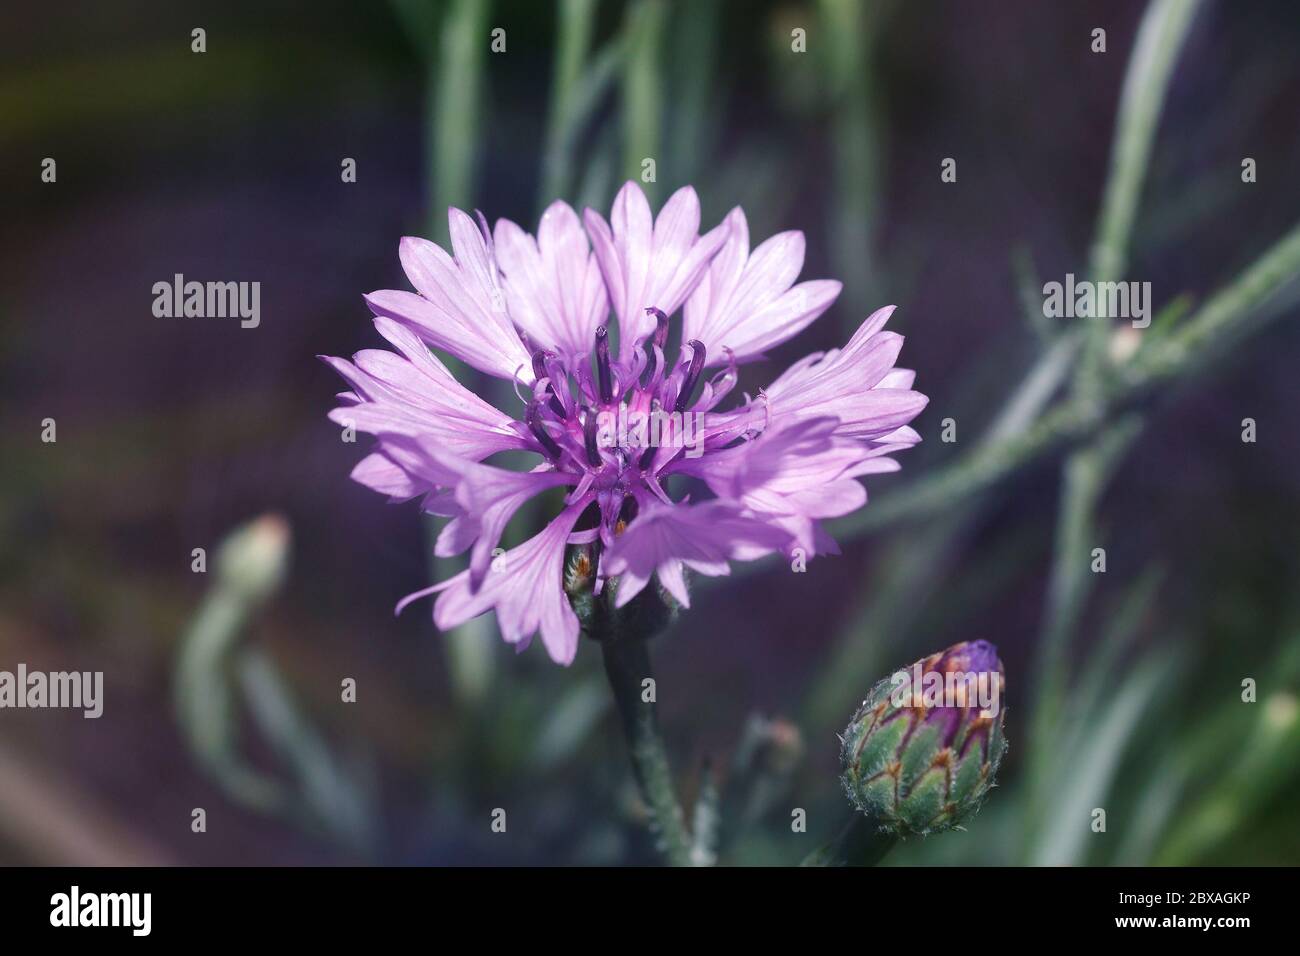 flower of cornflower, violet Centaurea in the garden, selective focus Stock Photo